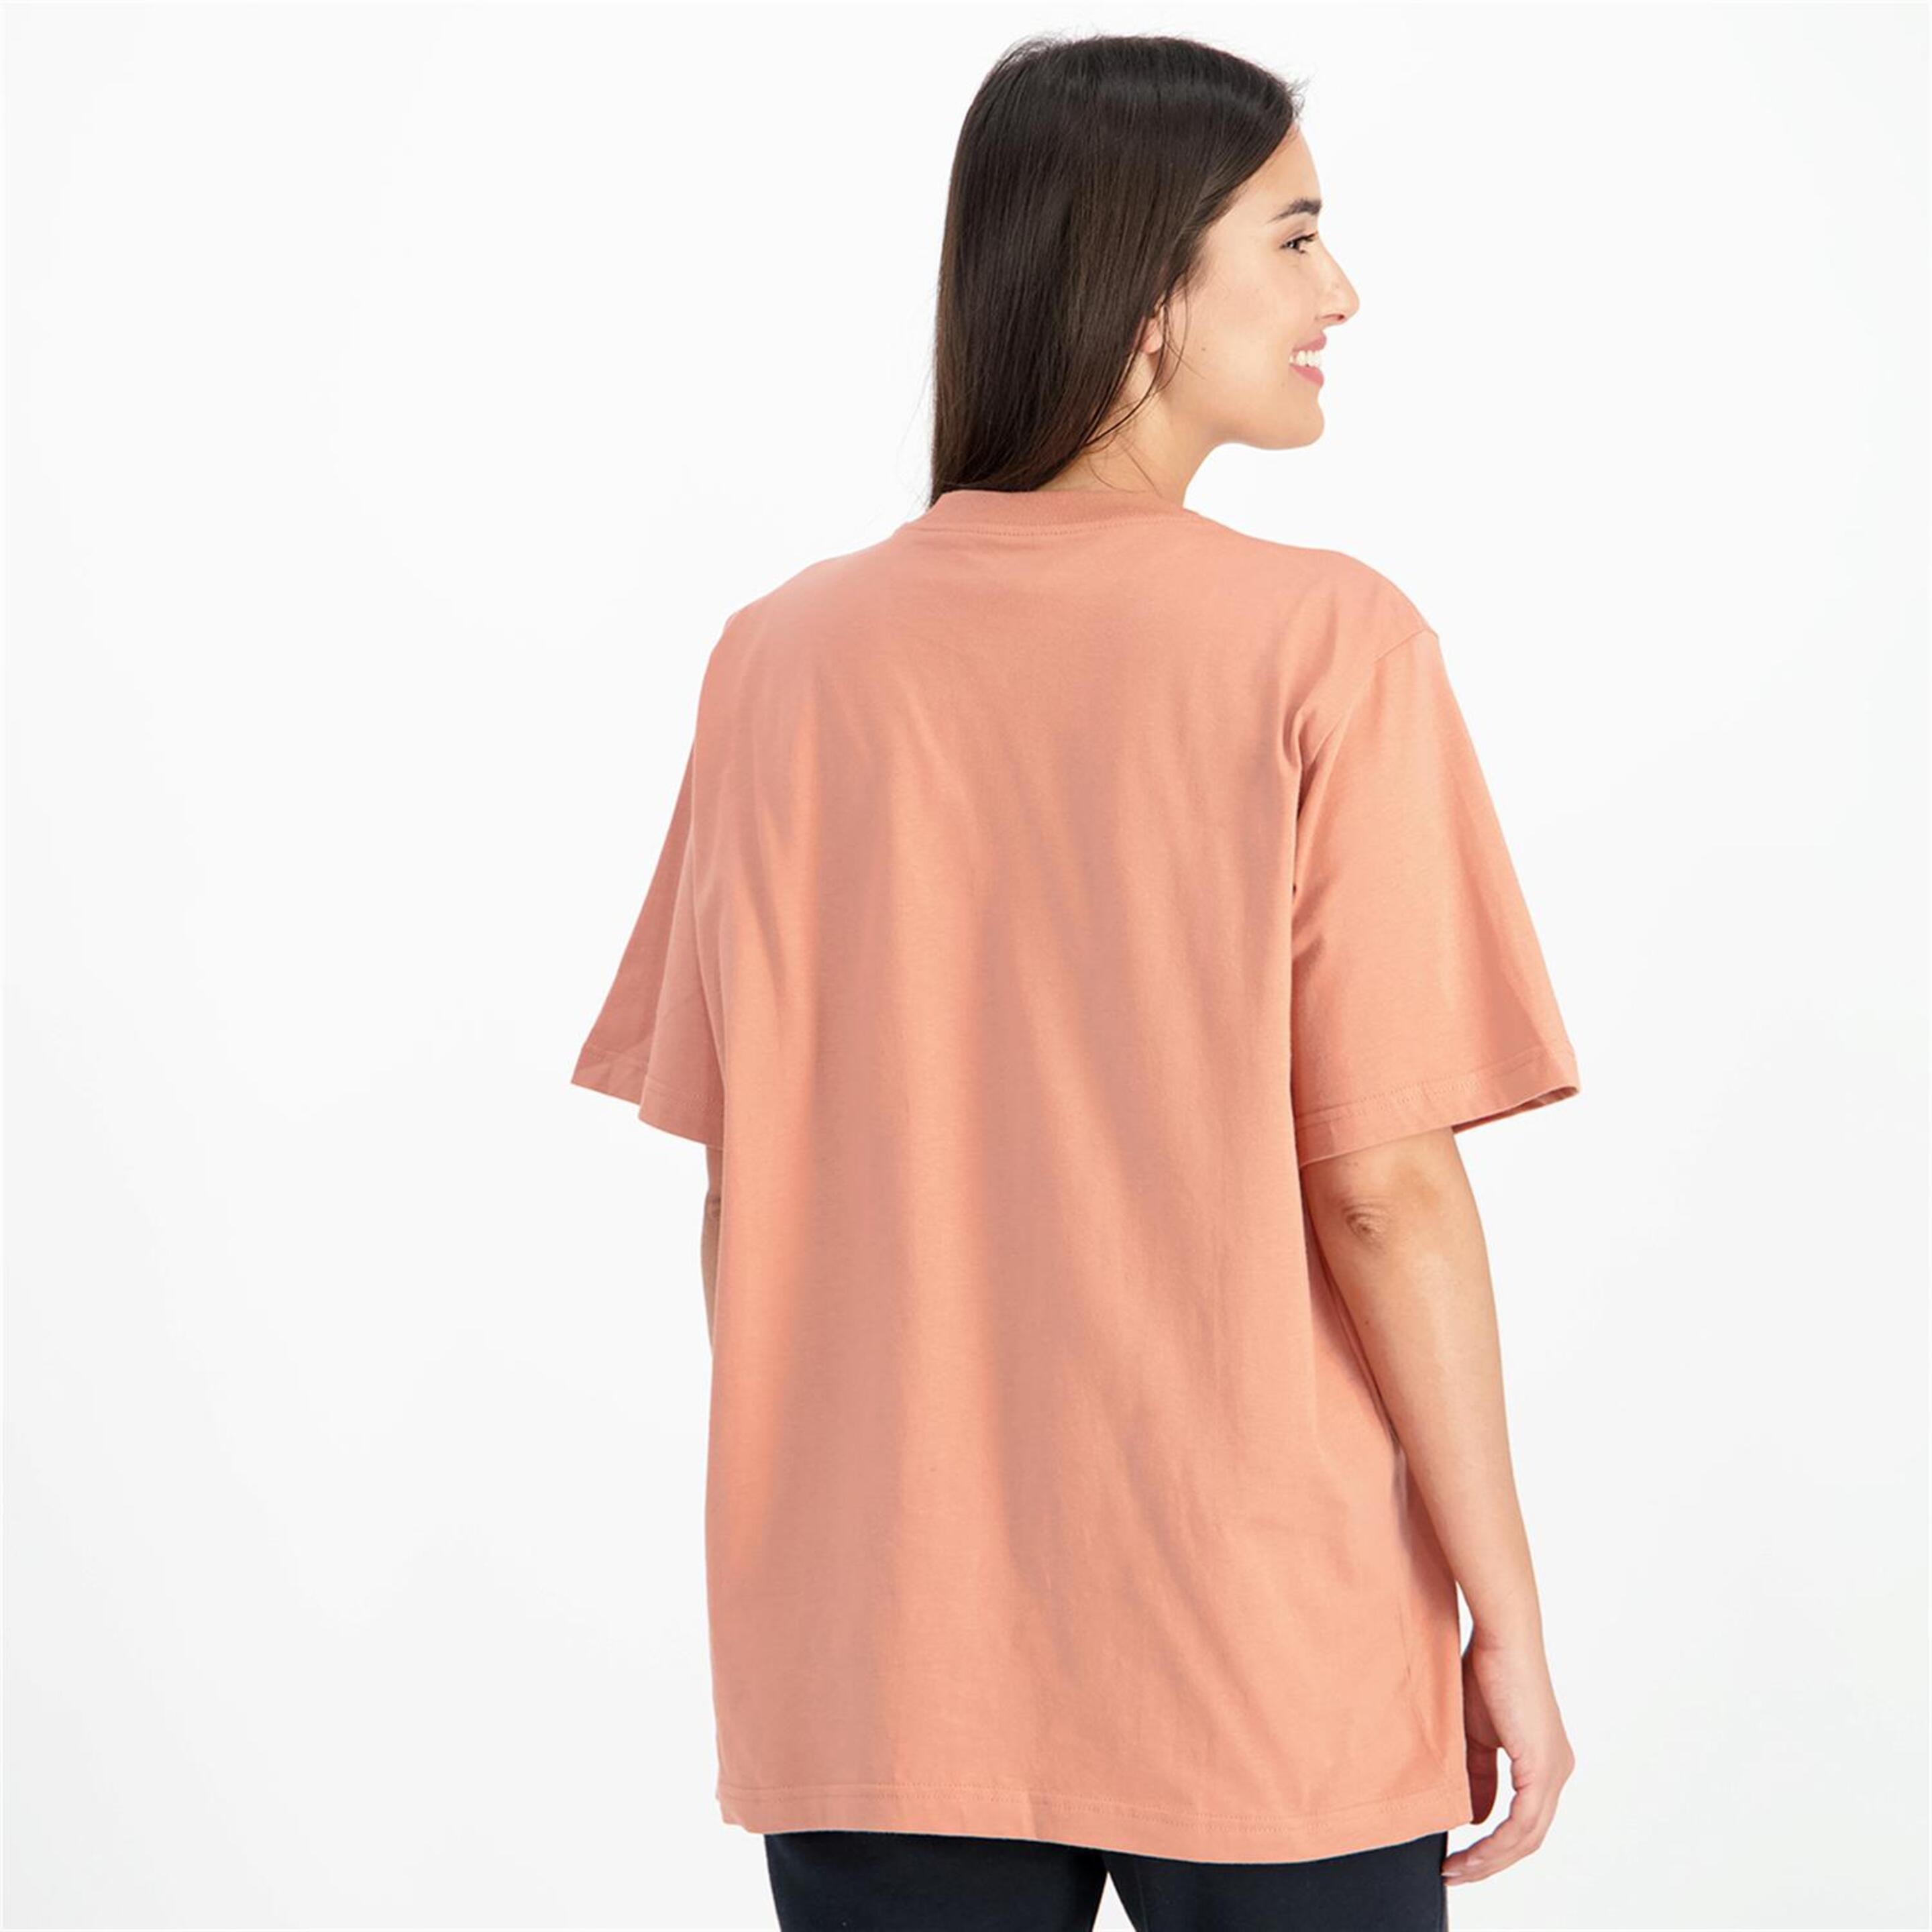 Camiseta Nike - Marrón - Camiseta Oversize Mujer